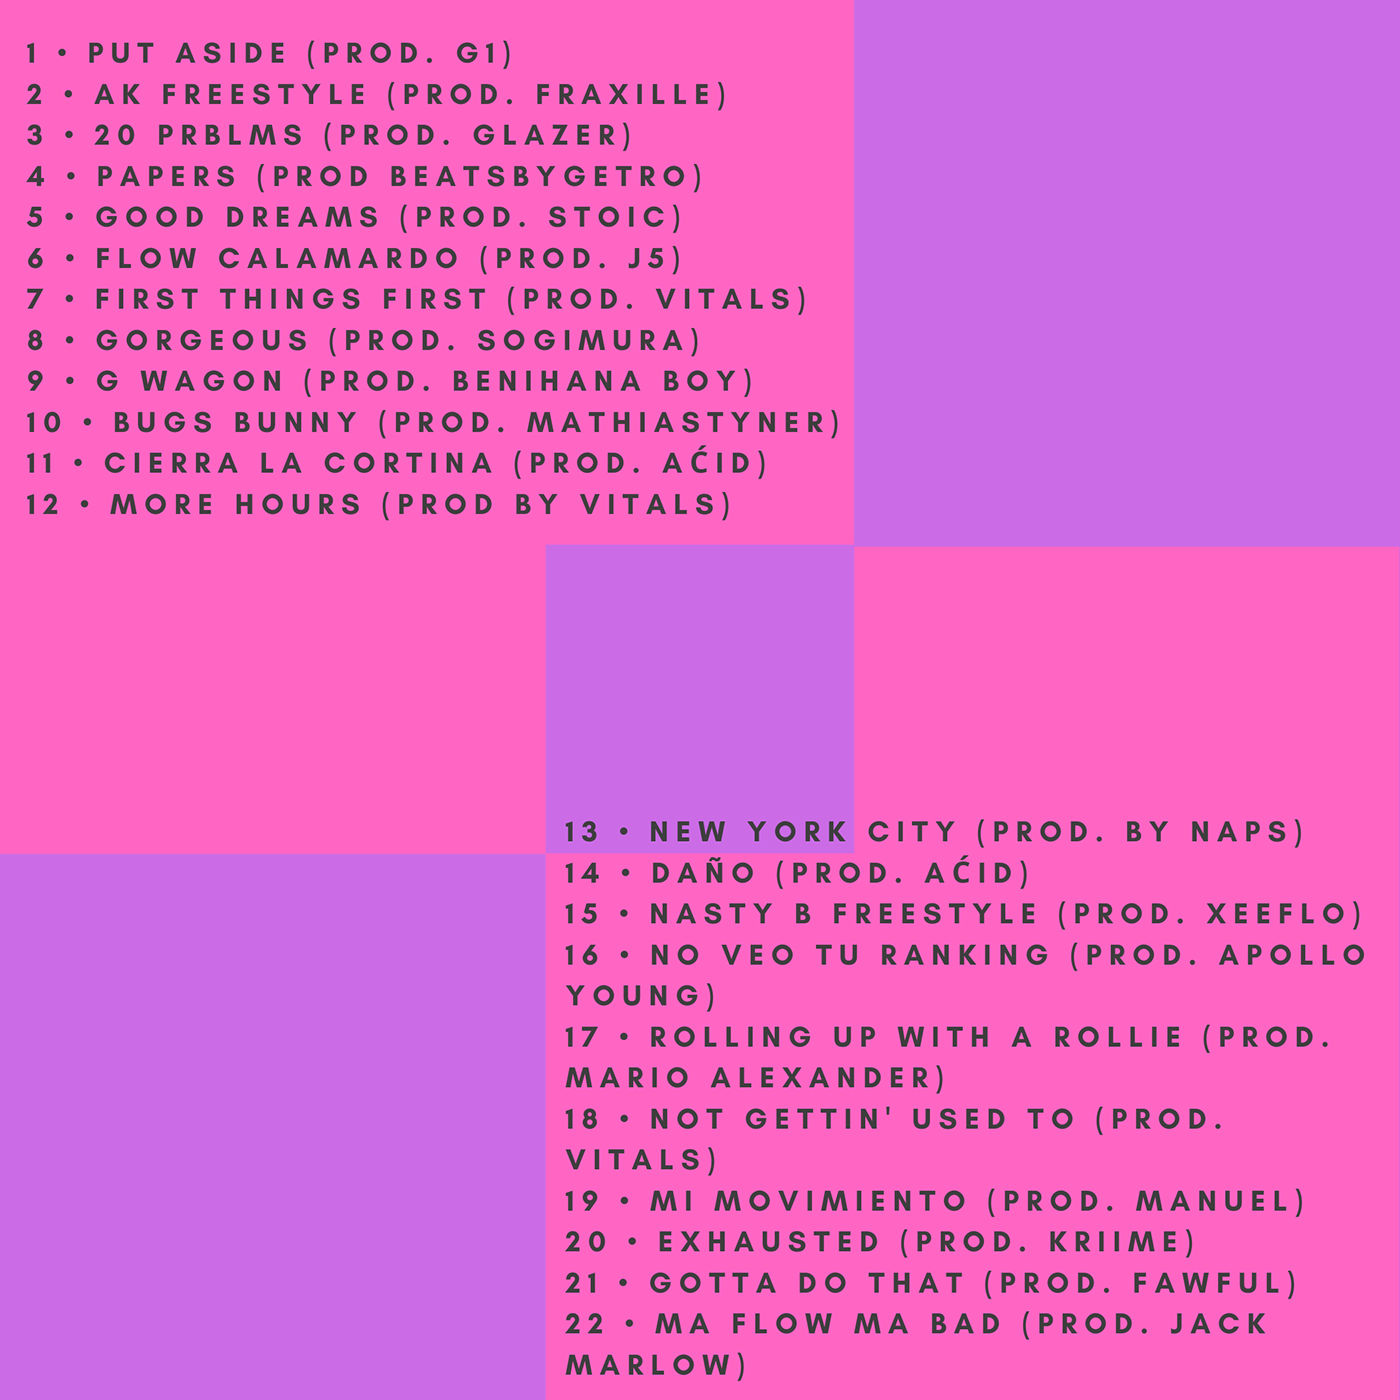 pink purple artwork Cover Art cover design album cover tracklist cd cover book